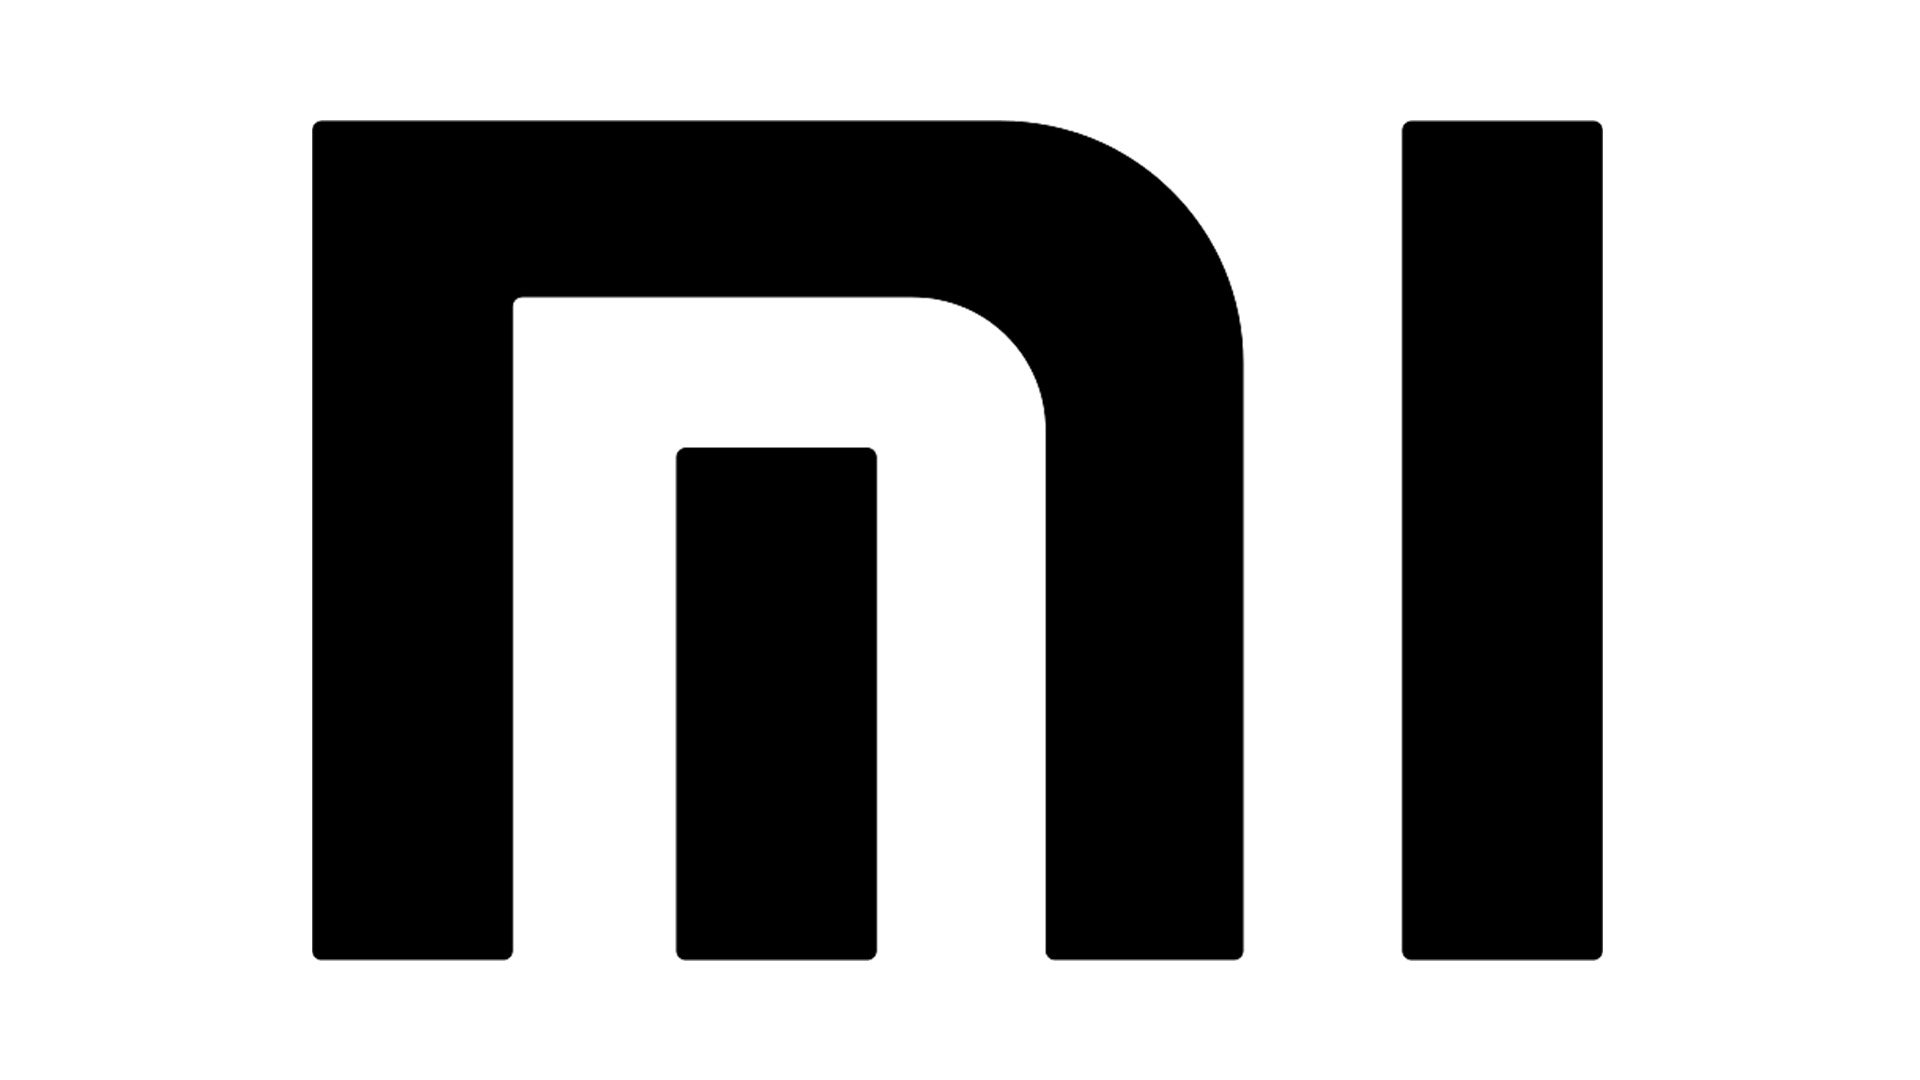 Www mi com global. Лого ьш ксиоми. Xiaomi logo вектор. Xiaomi logo 2022. Xiaomi товарный знак.